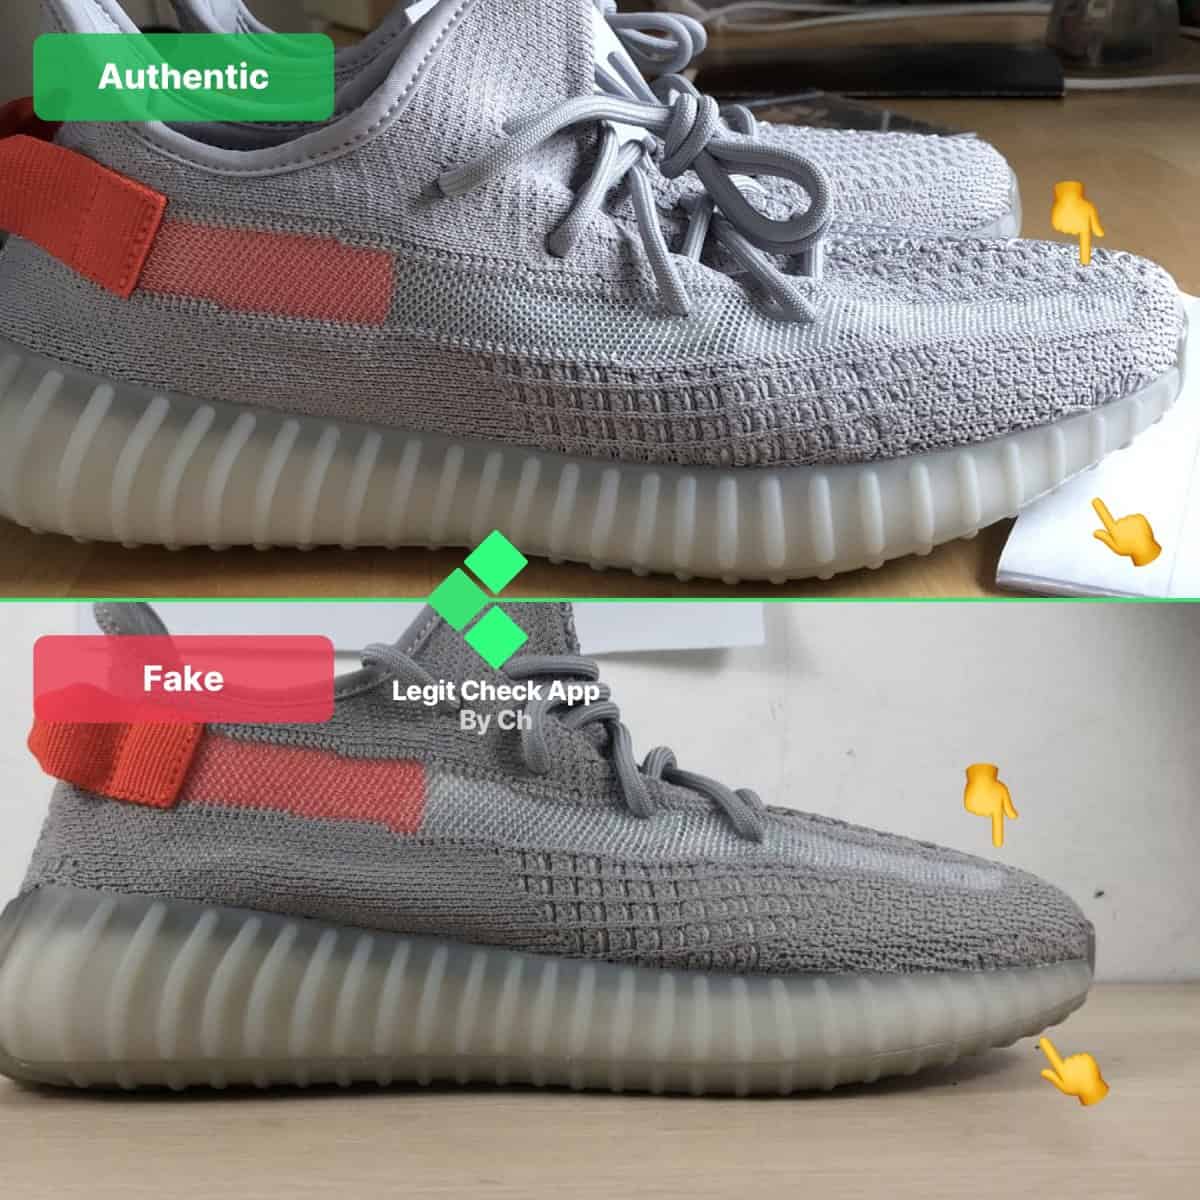 fake vs real yeezy tail light